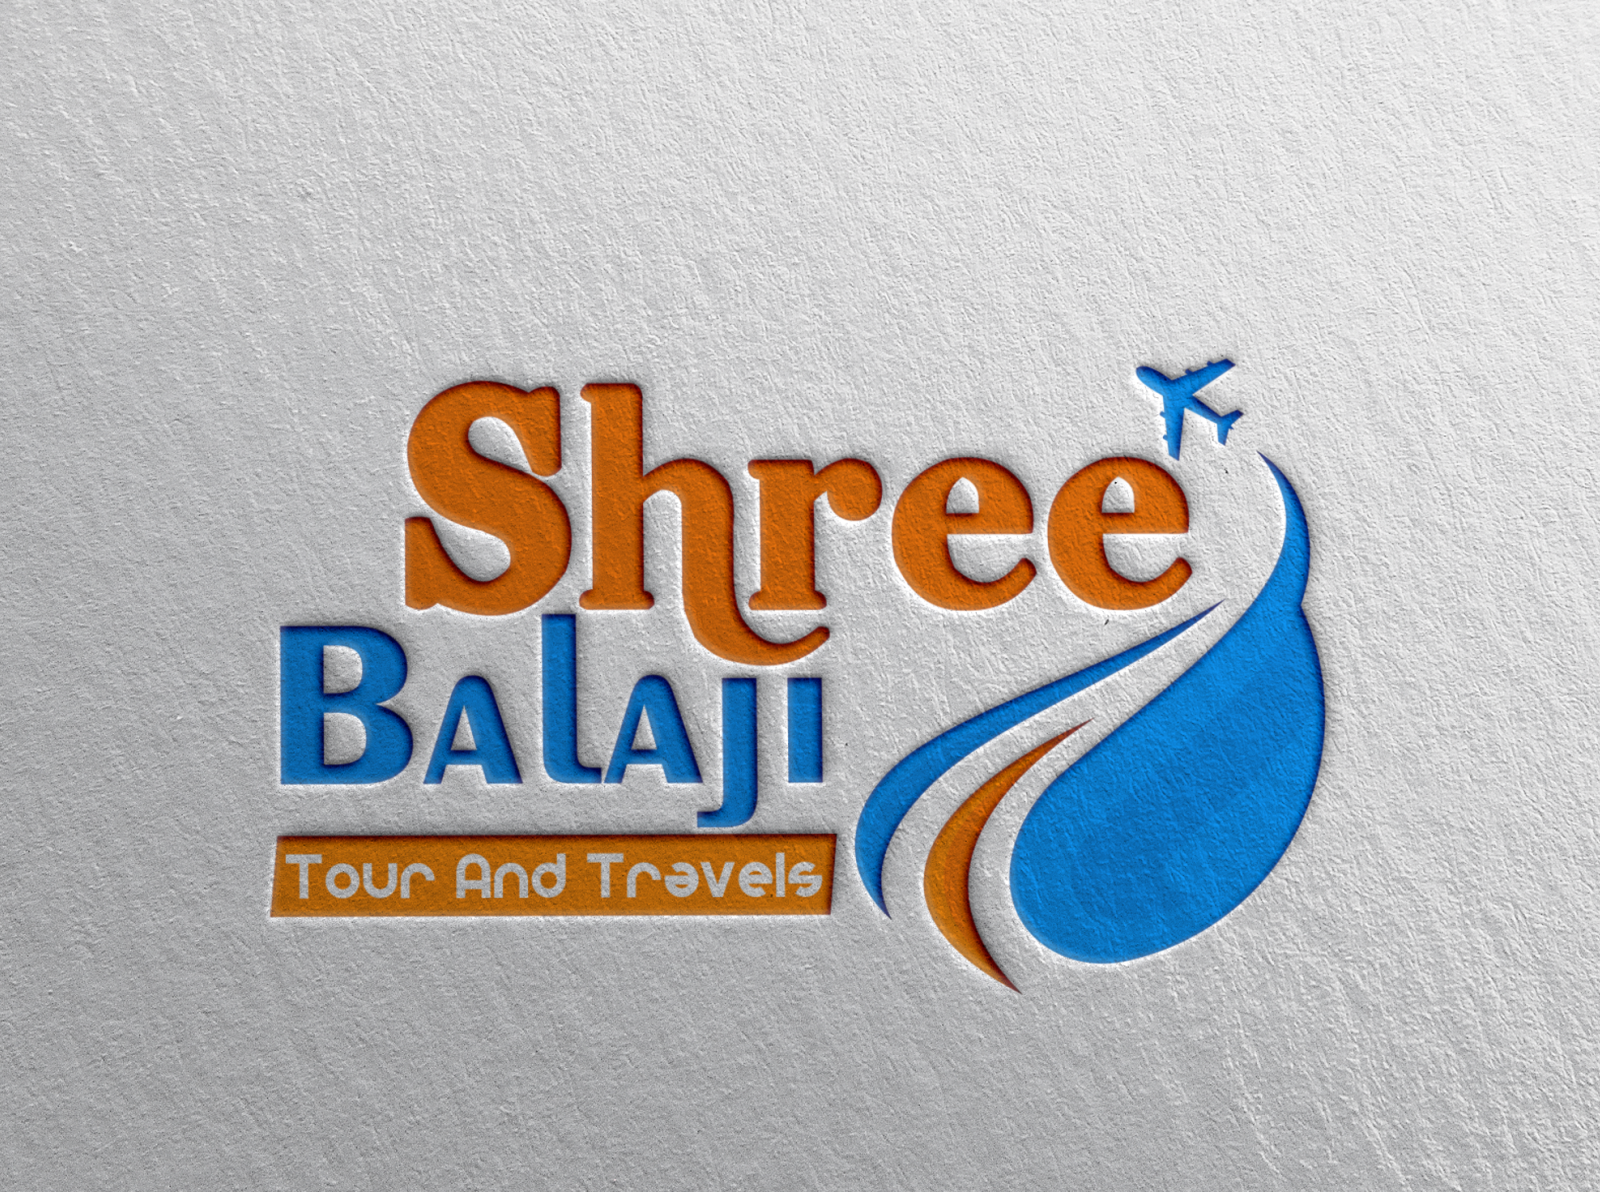 Balaji Telefilms gets new corporate identity, announces new initiative |  Advertising | Campaign India